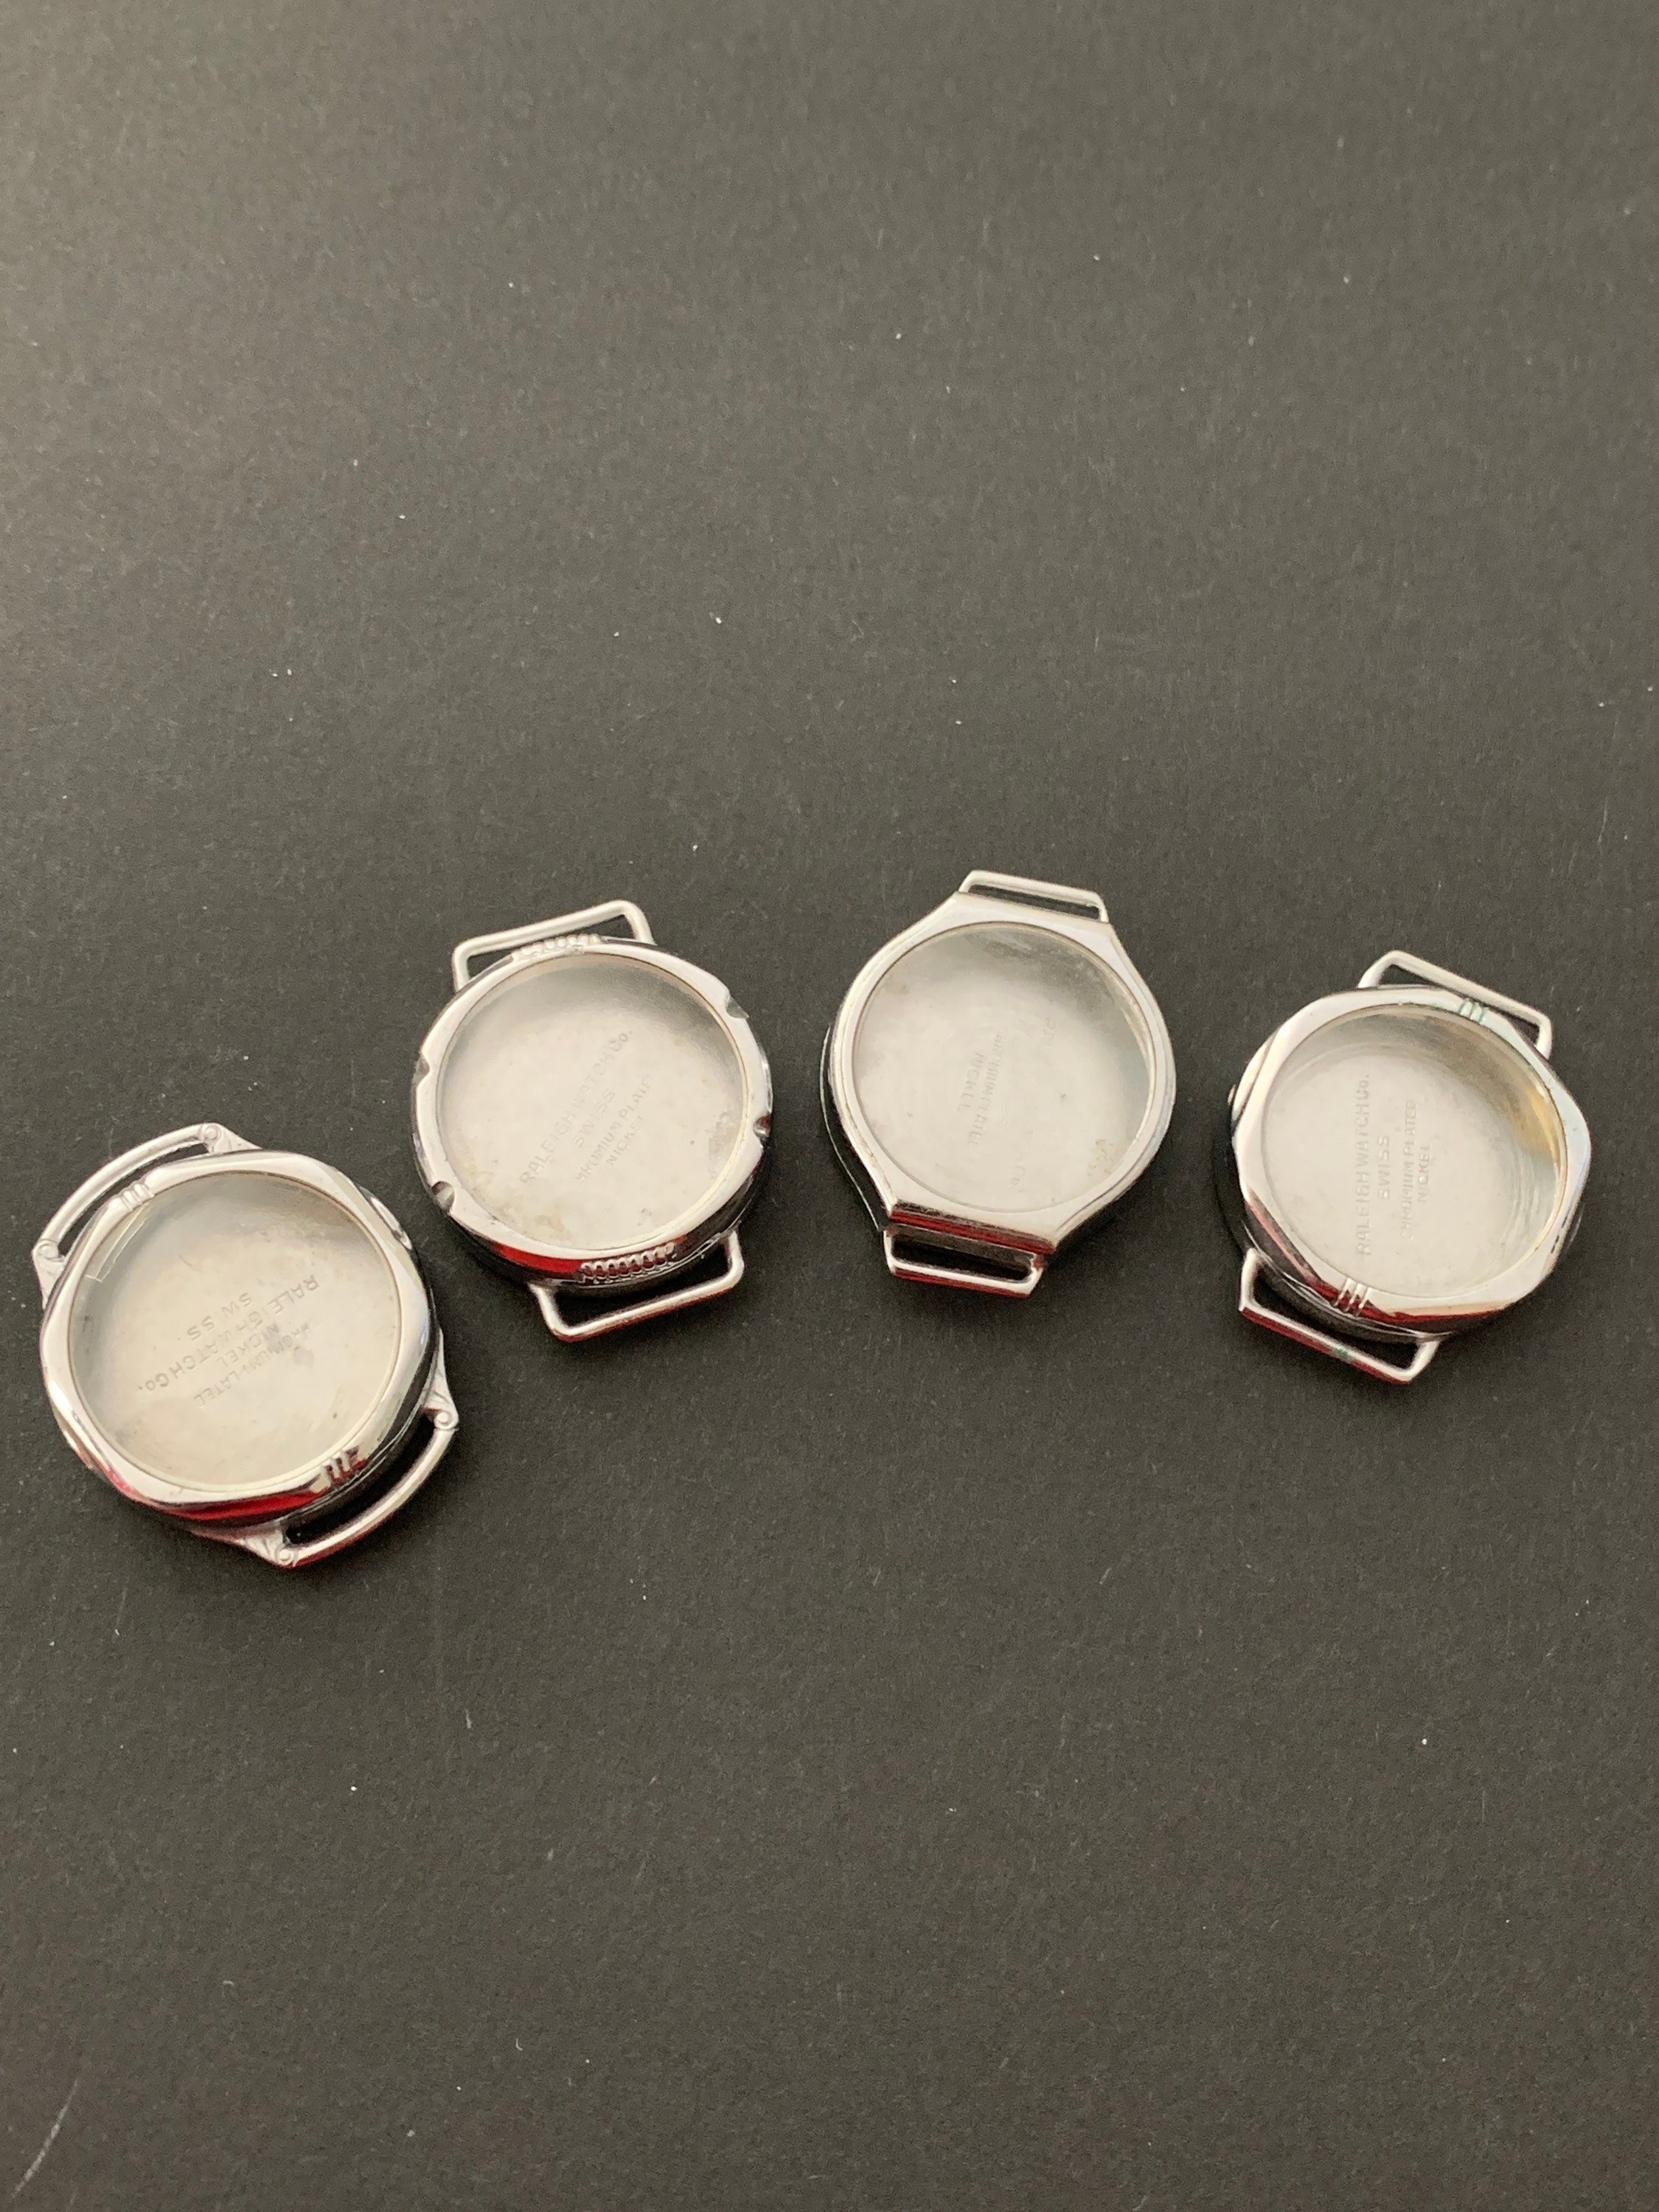 6 Pc Tweezers Set Stainless Steel Hobby Craft Jewelry Watch Repair Beading  PR94 